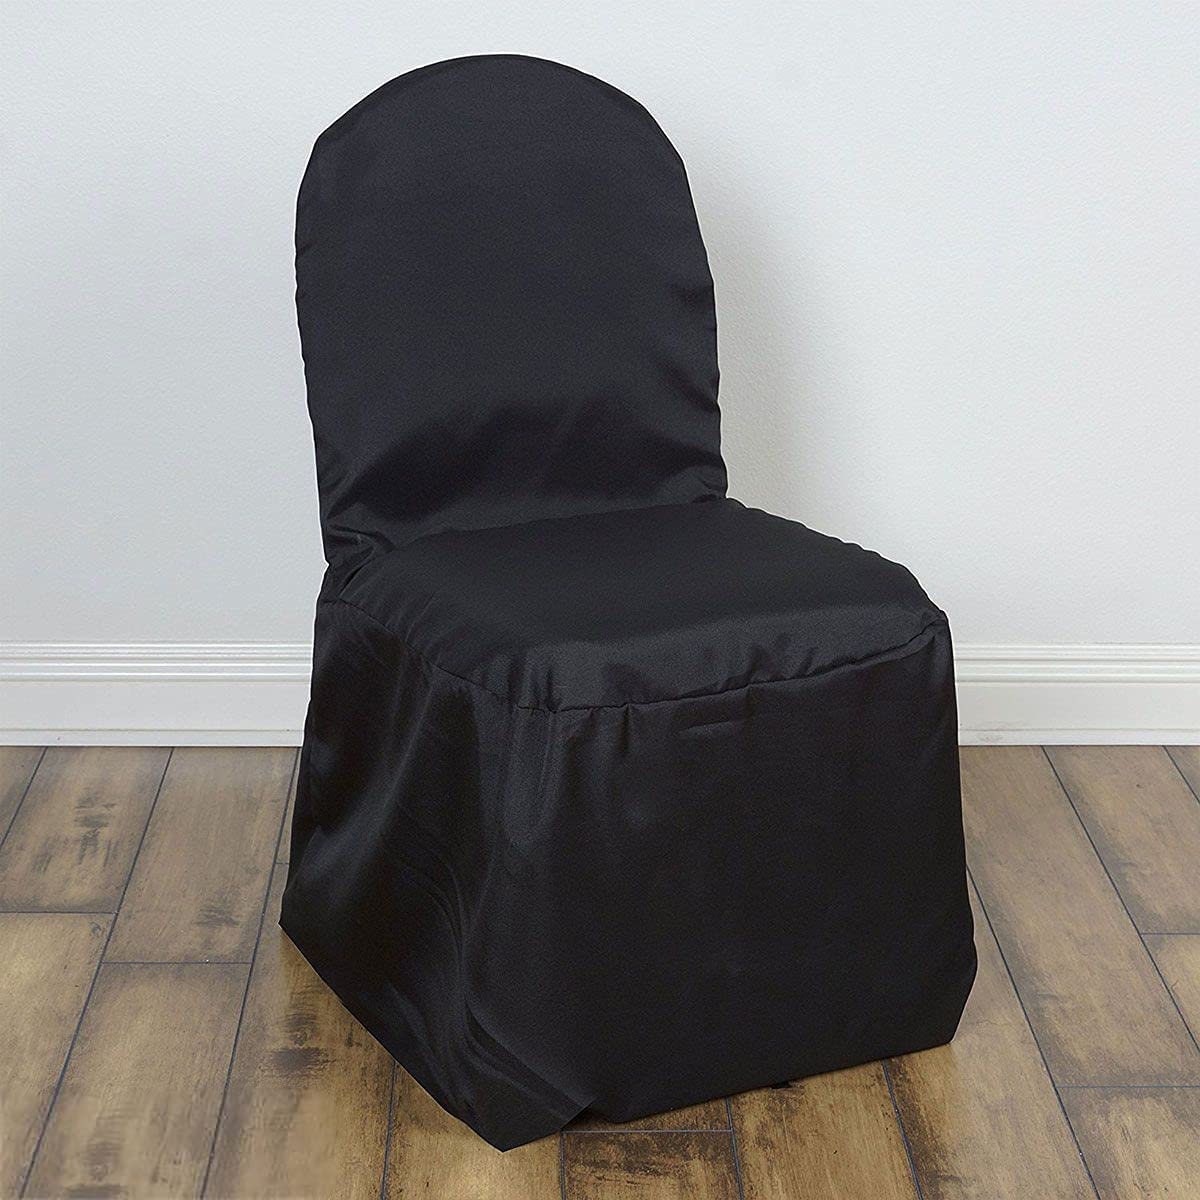 Chair Cover Black Spandex